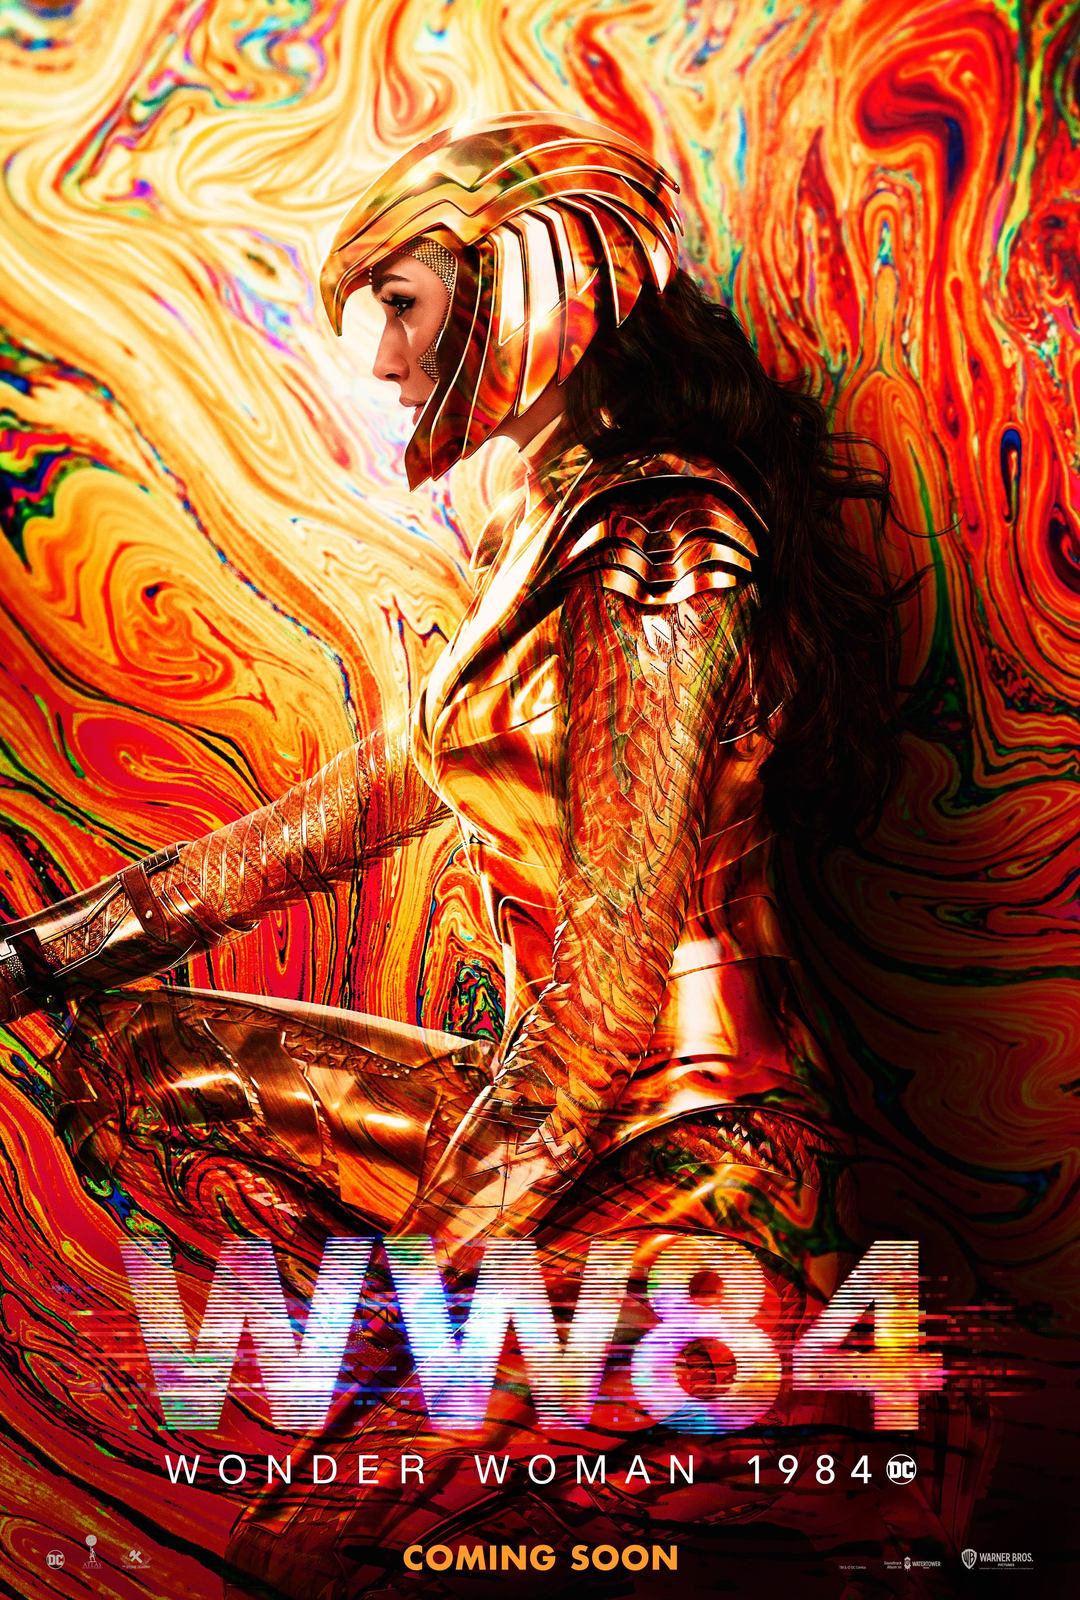 Wonder Woman 1984 Poster Gal Gadot DC 2020 Movie Art Film Print 24x36" 27x40" - $10.90 - $24.90